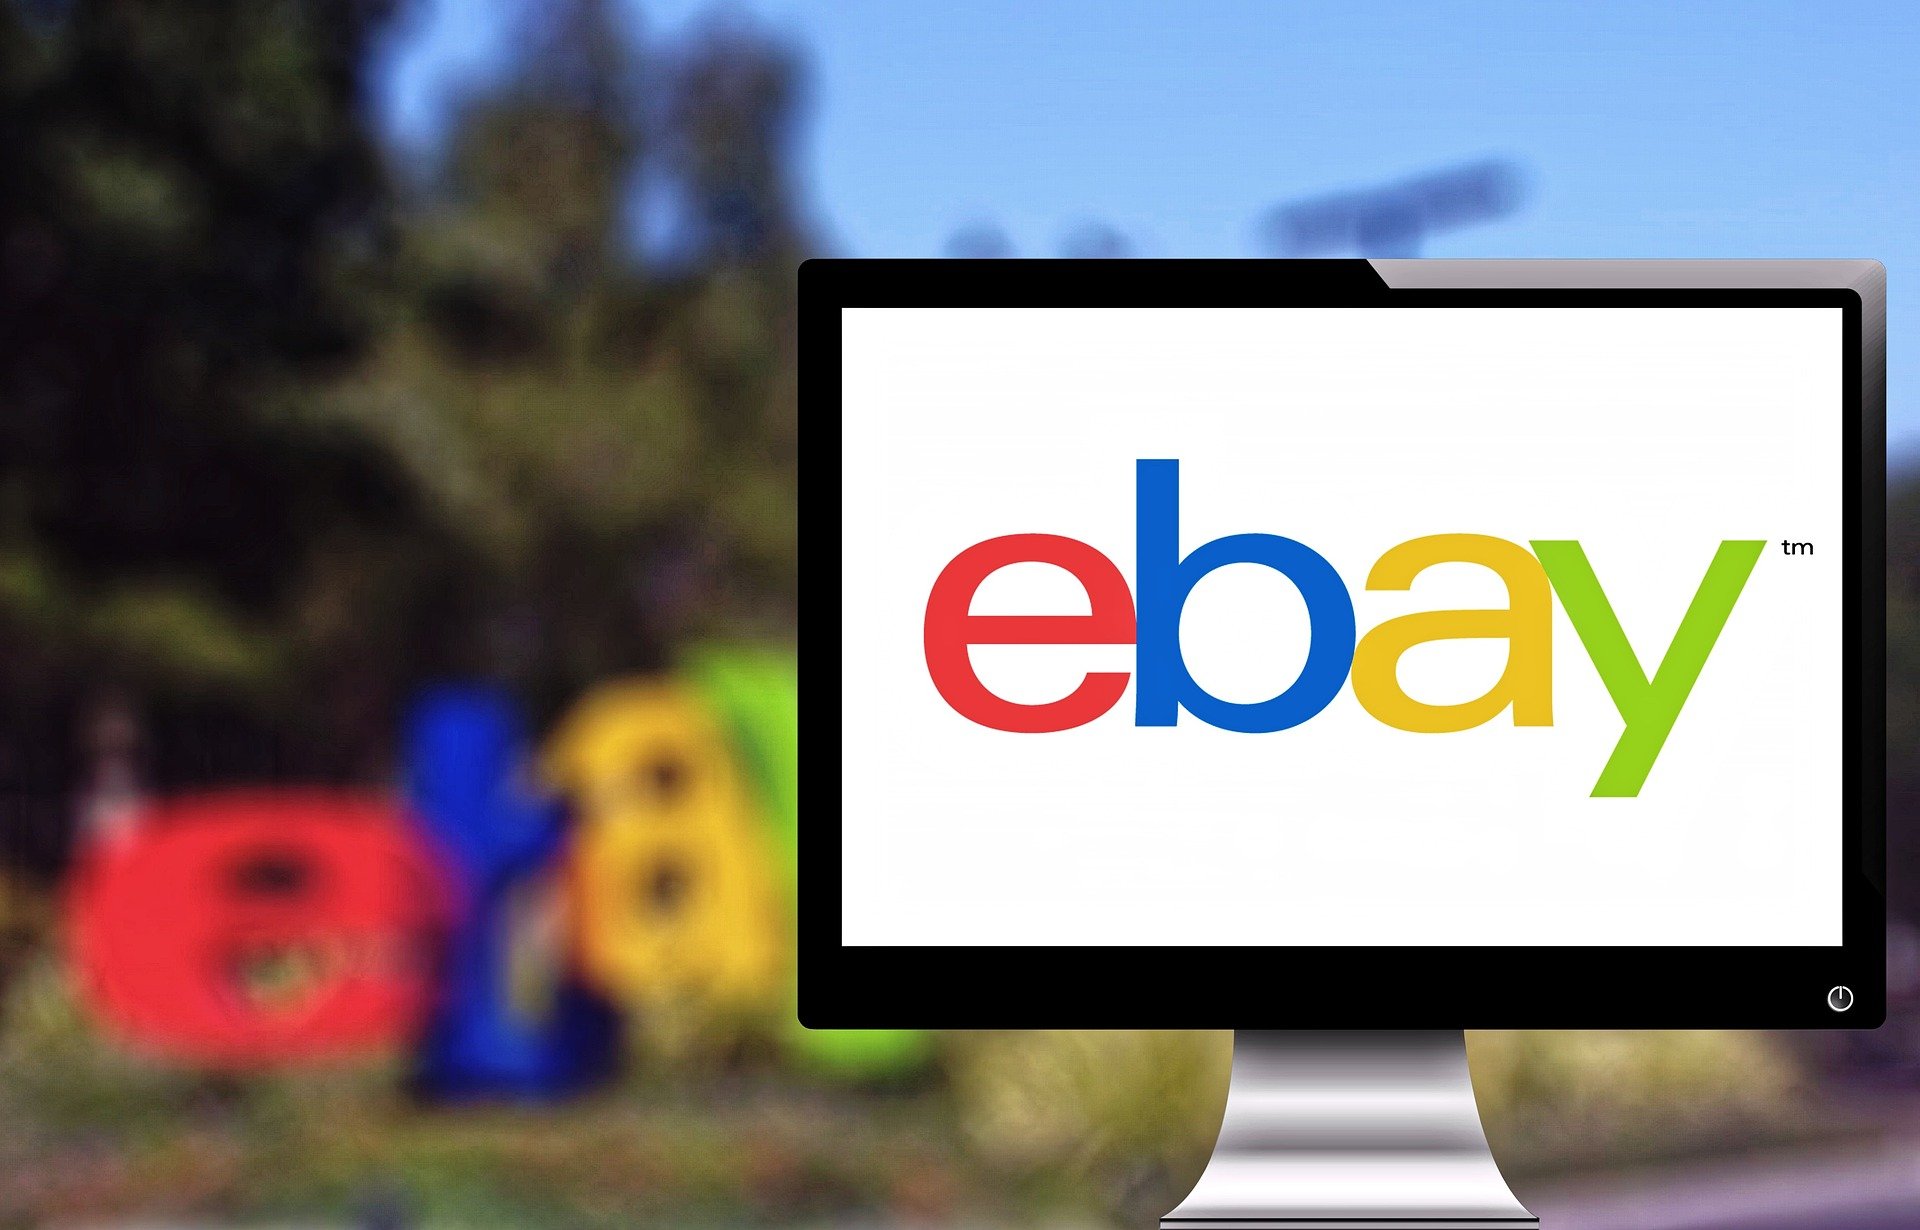 ebay - computer screen image - saving on school uniform costs